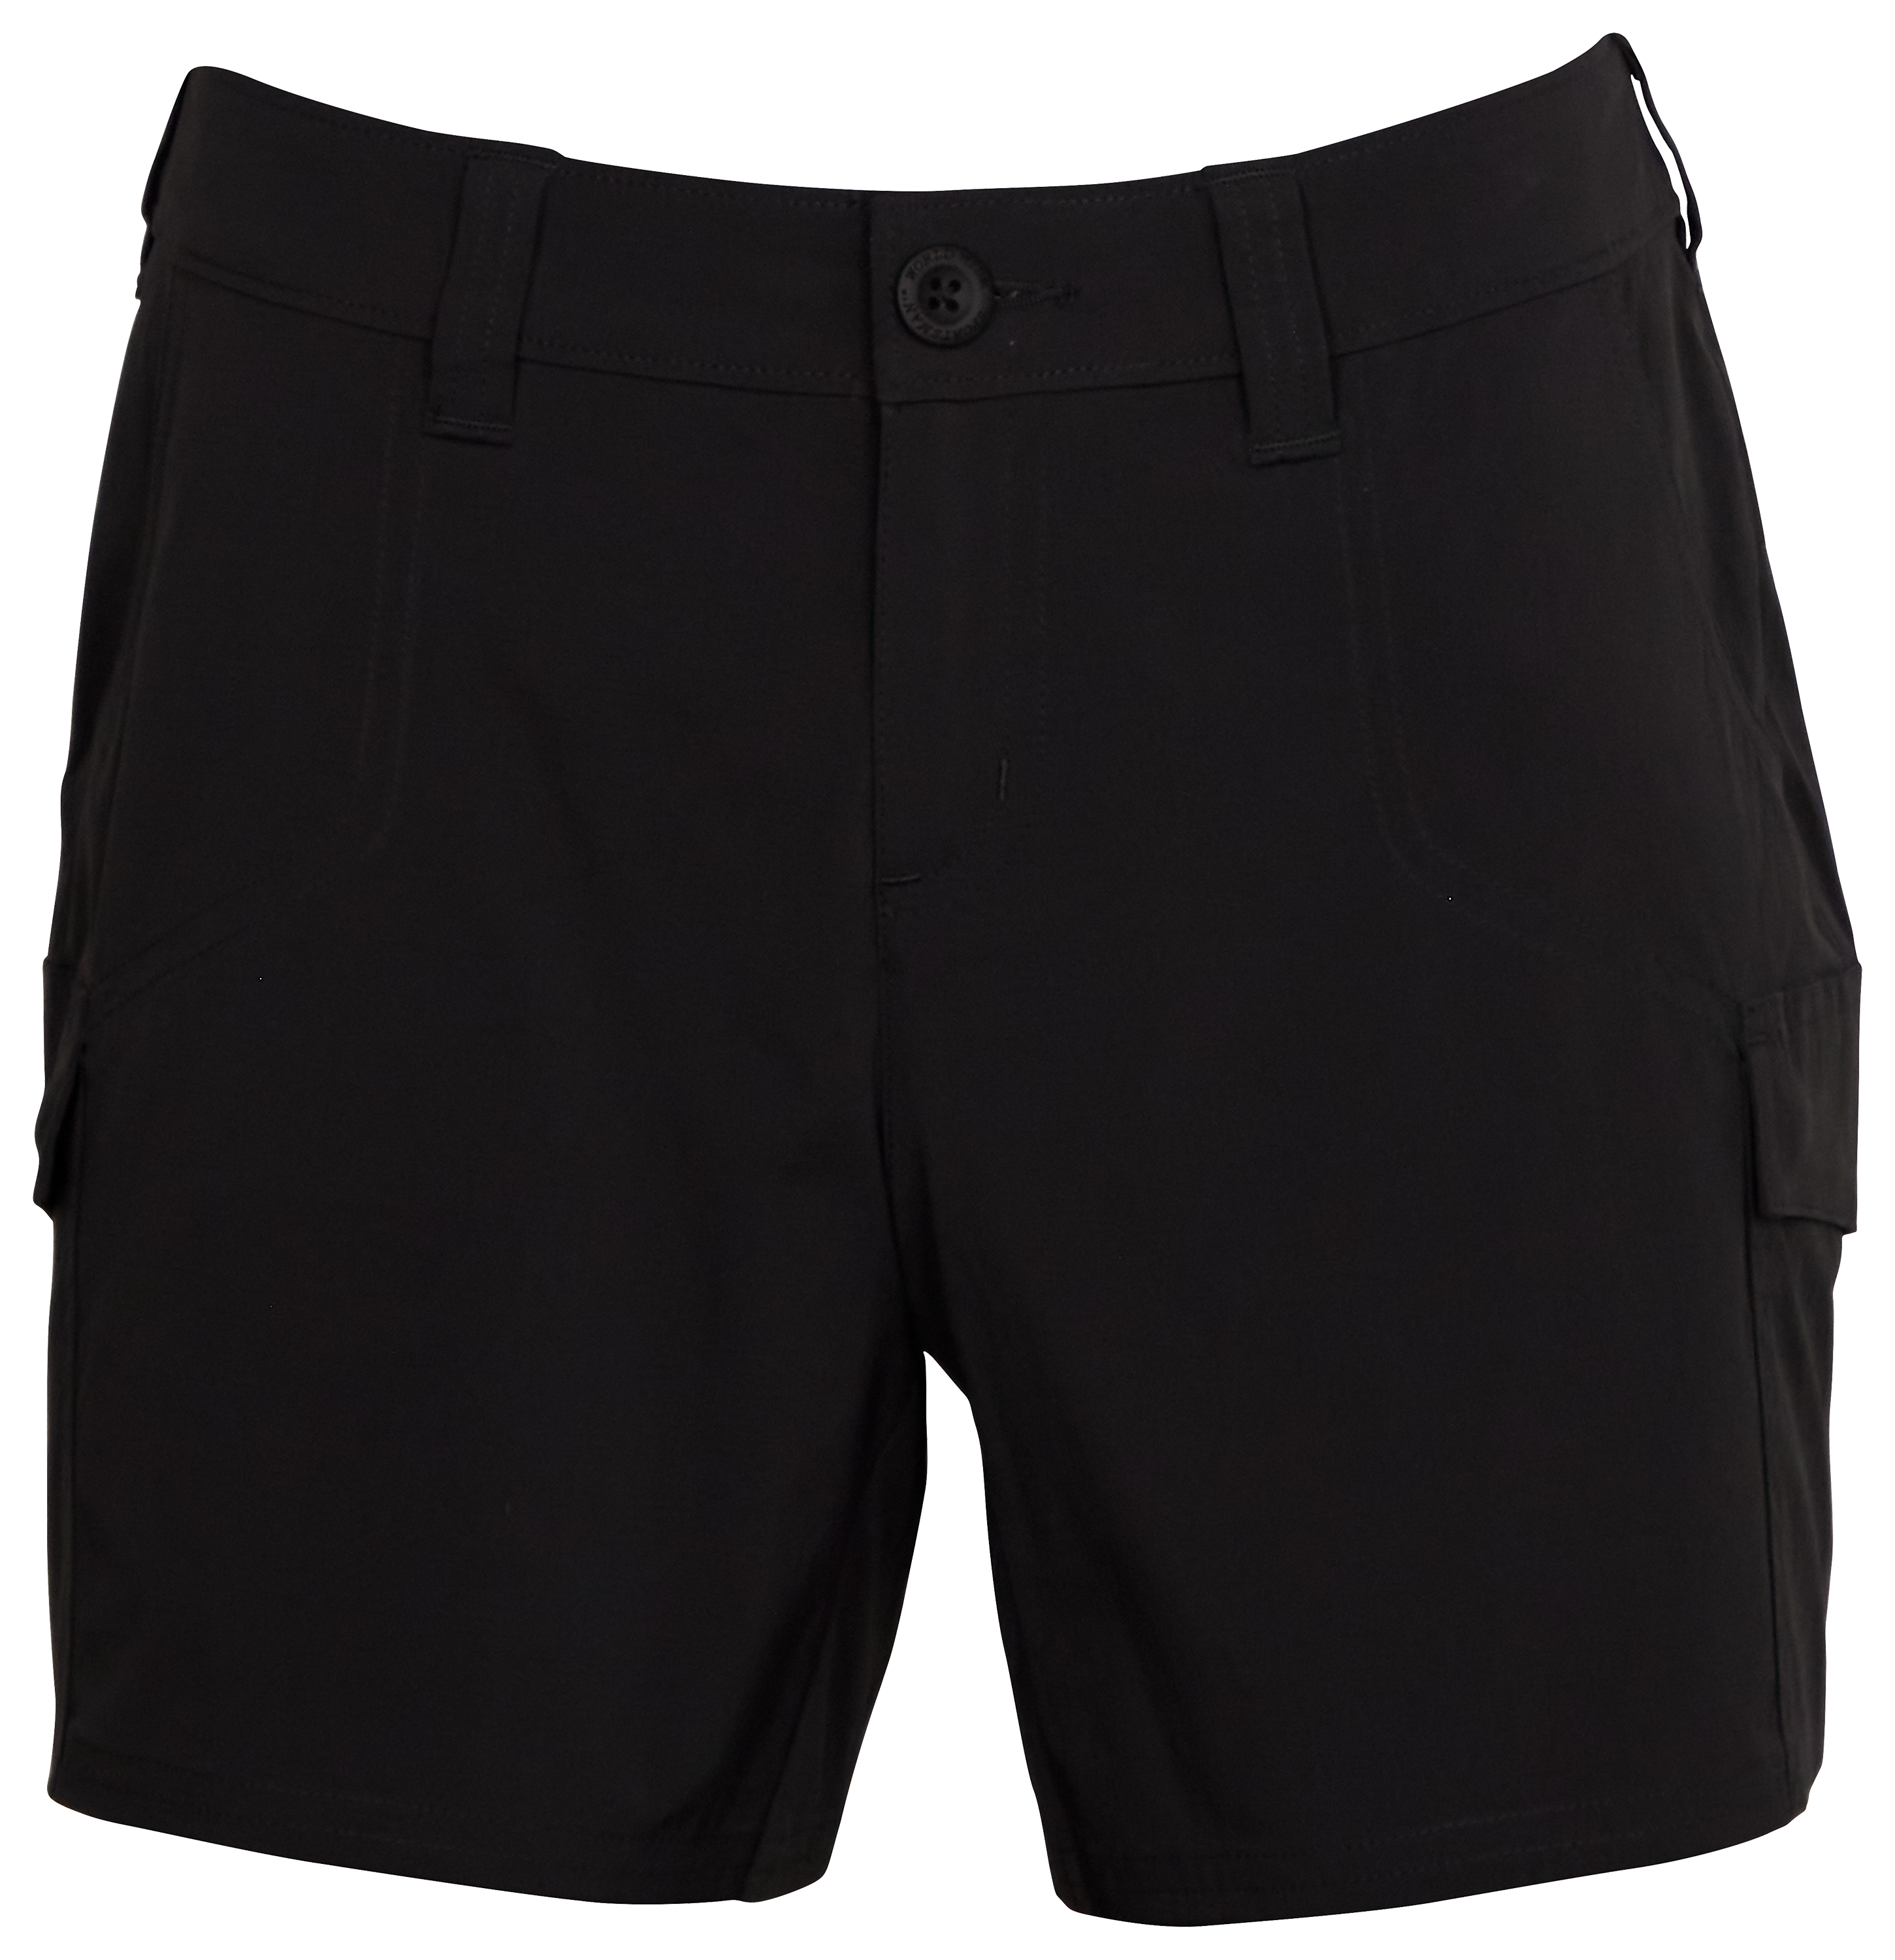 World Wide Sportsman Ripstop Cargo Shorts for Ladies - Jet Black - 10